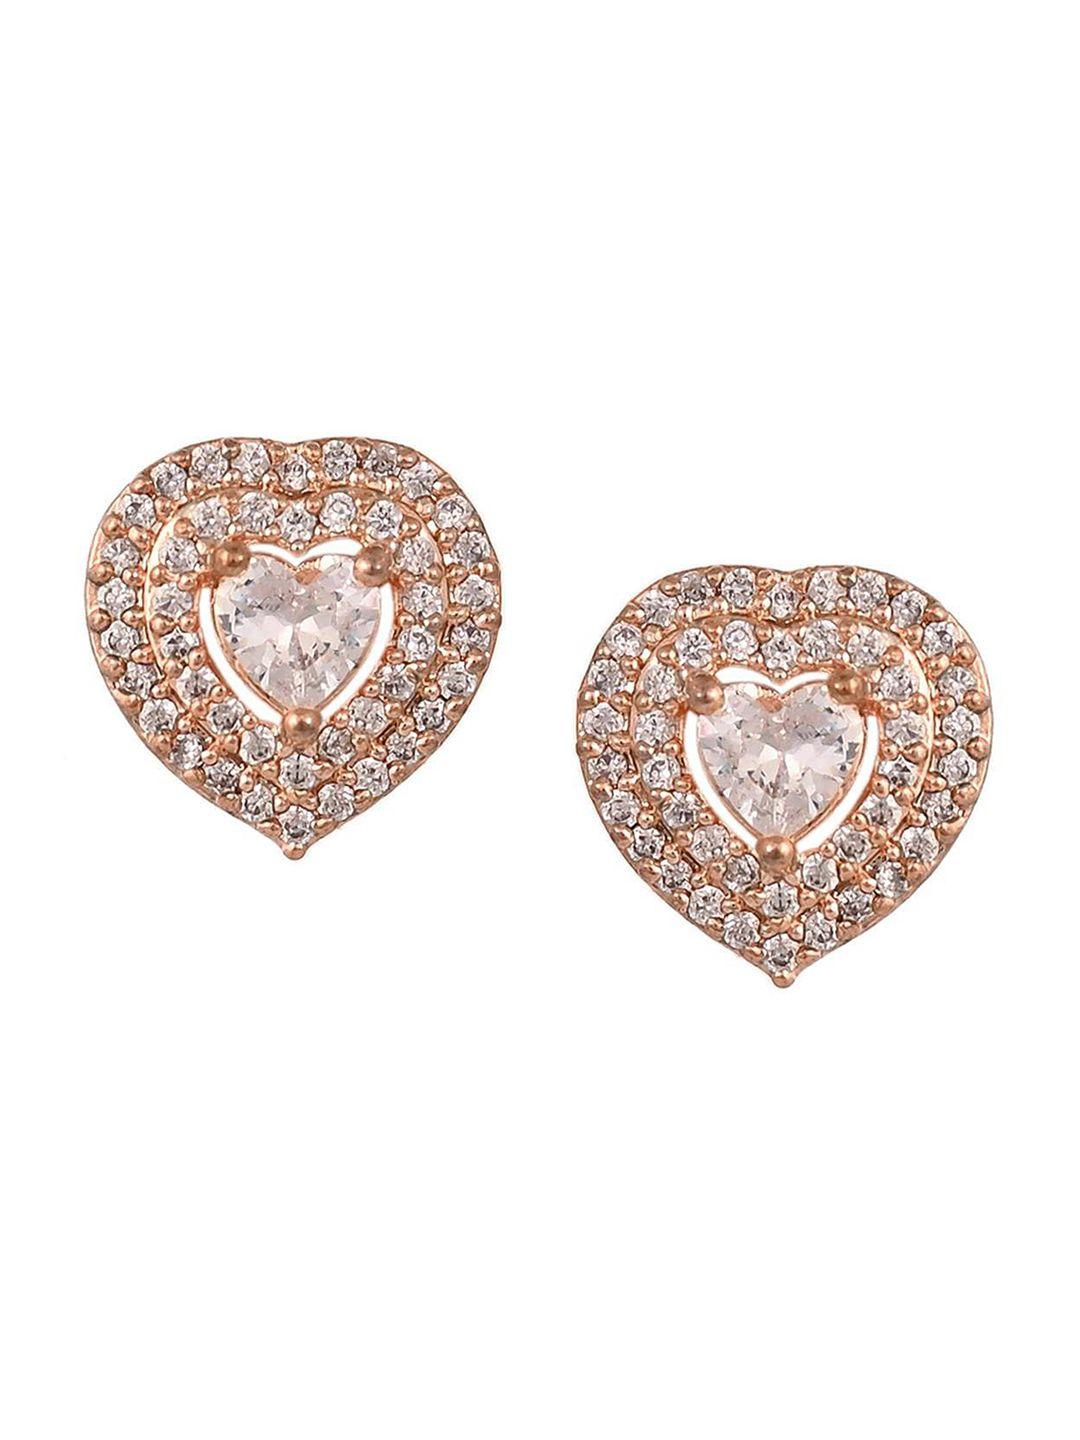 ratnavali jewels rose gold classic studs earrings